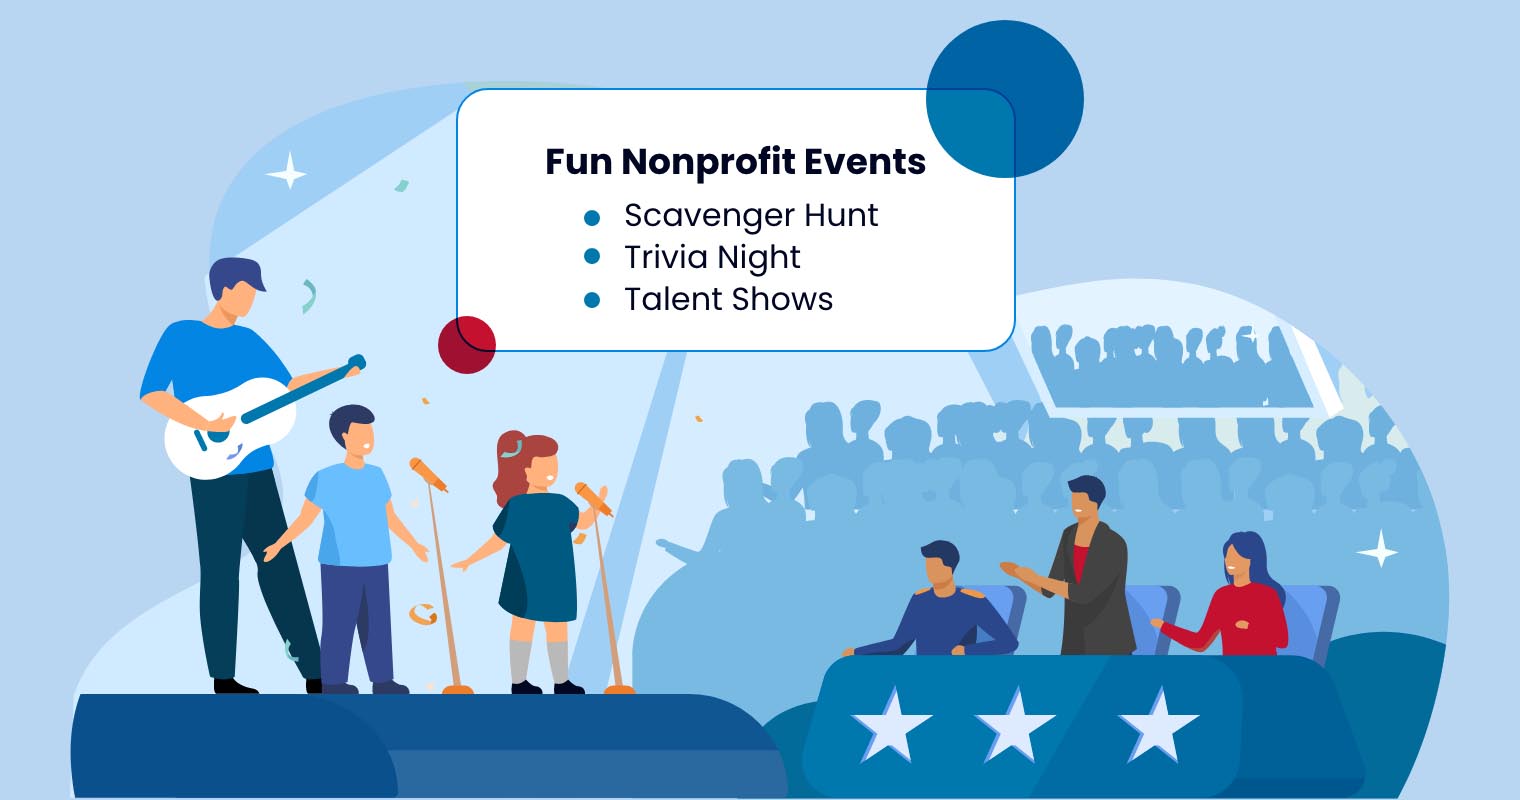 Fun Nonprofit Events